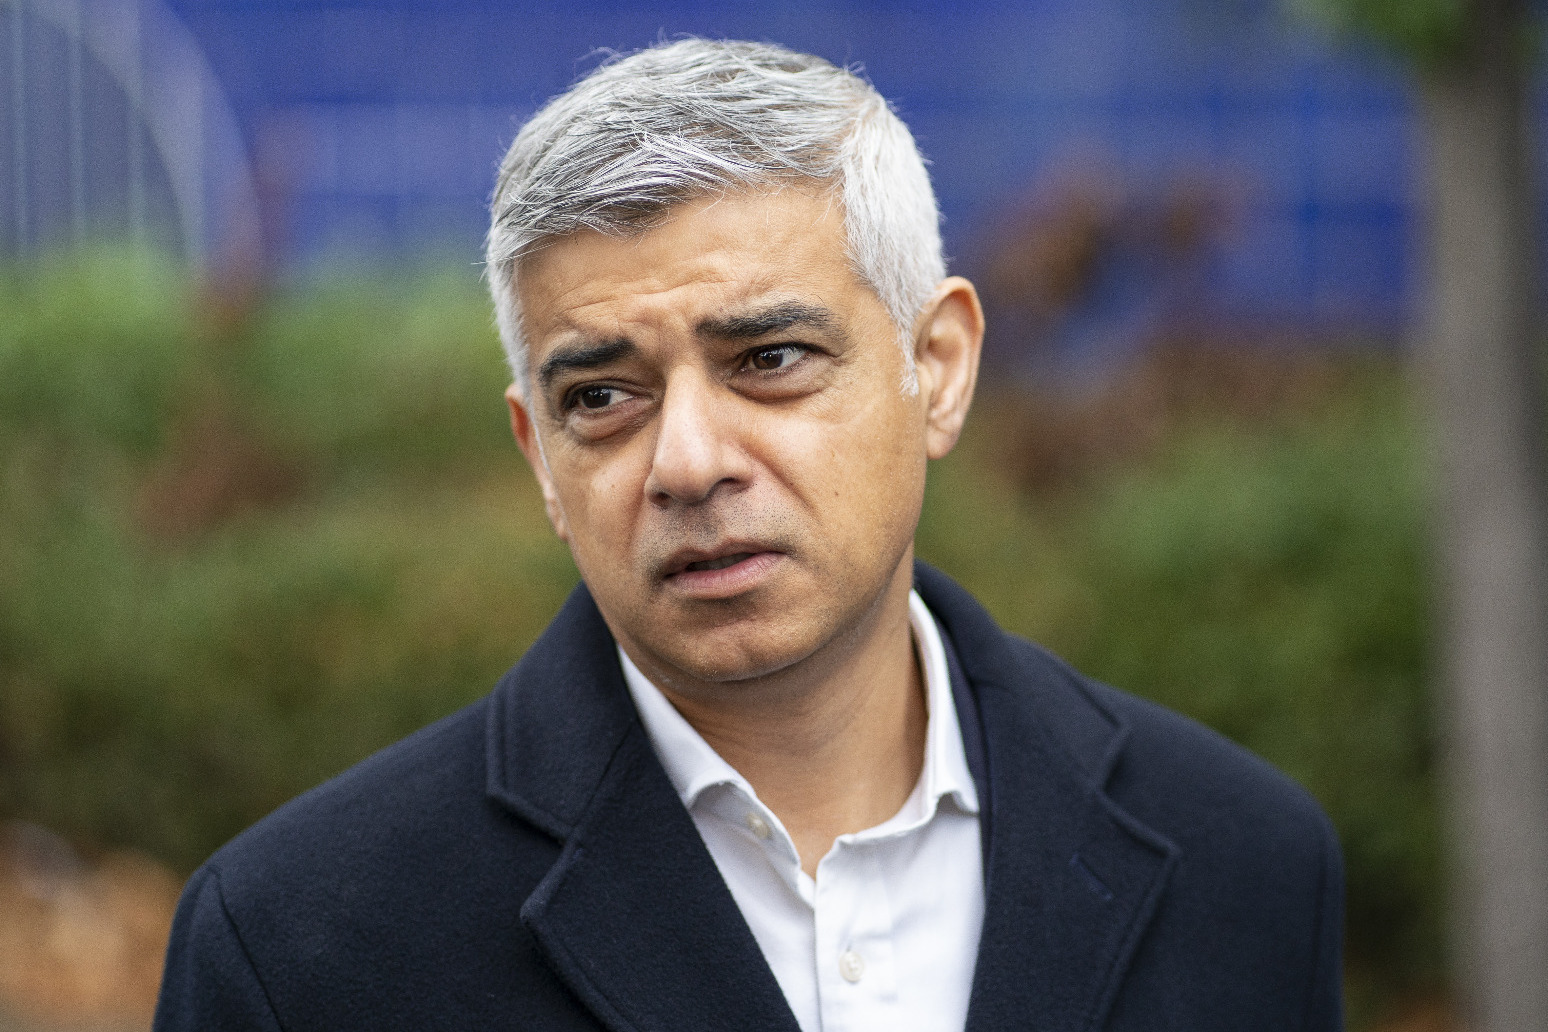 Sadiq Khan unveils plan to raise council tax in London 